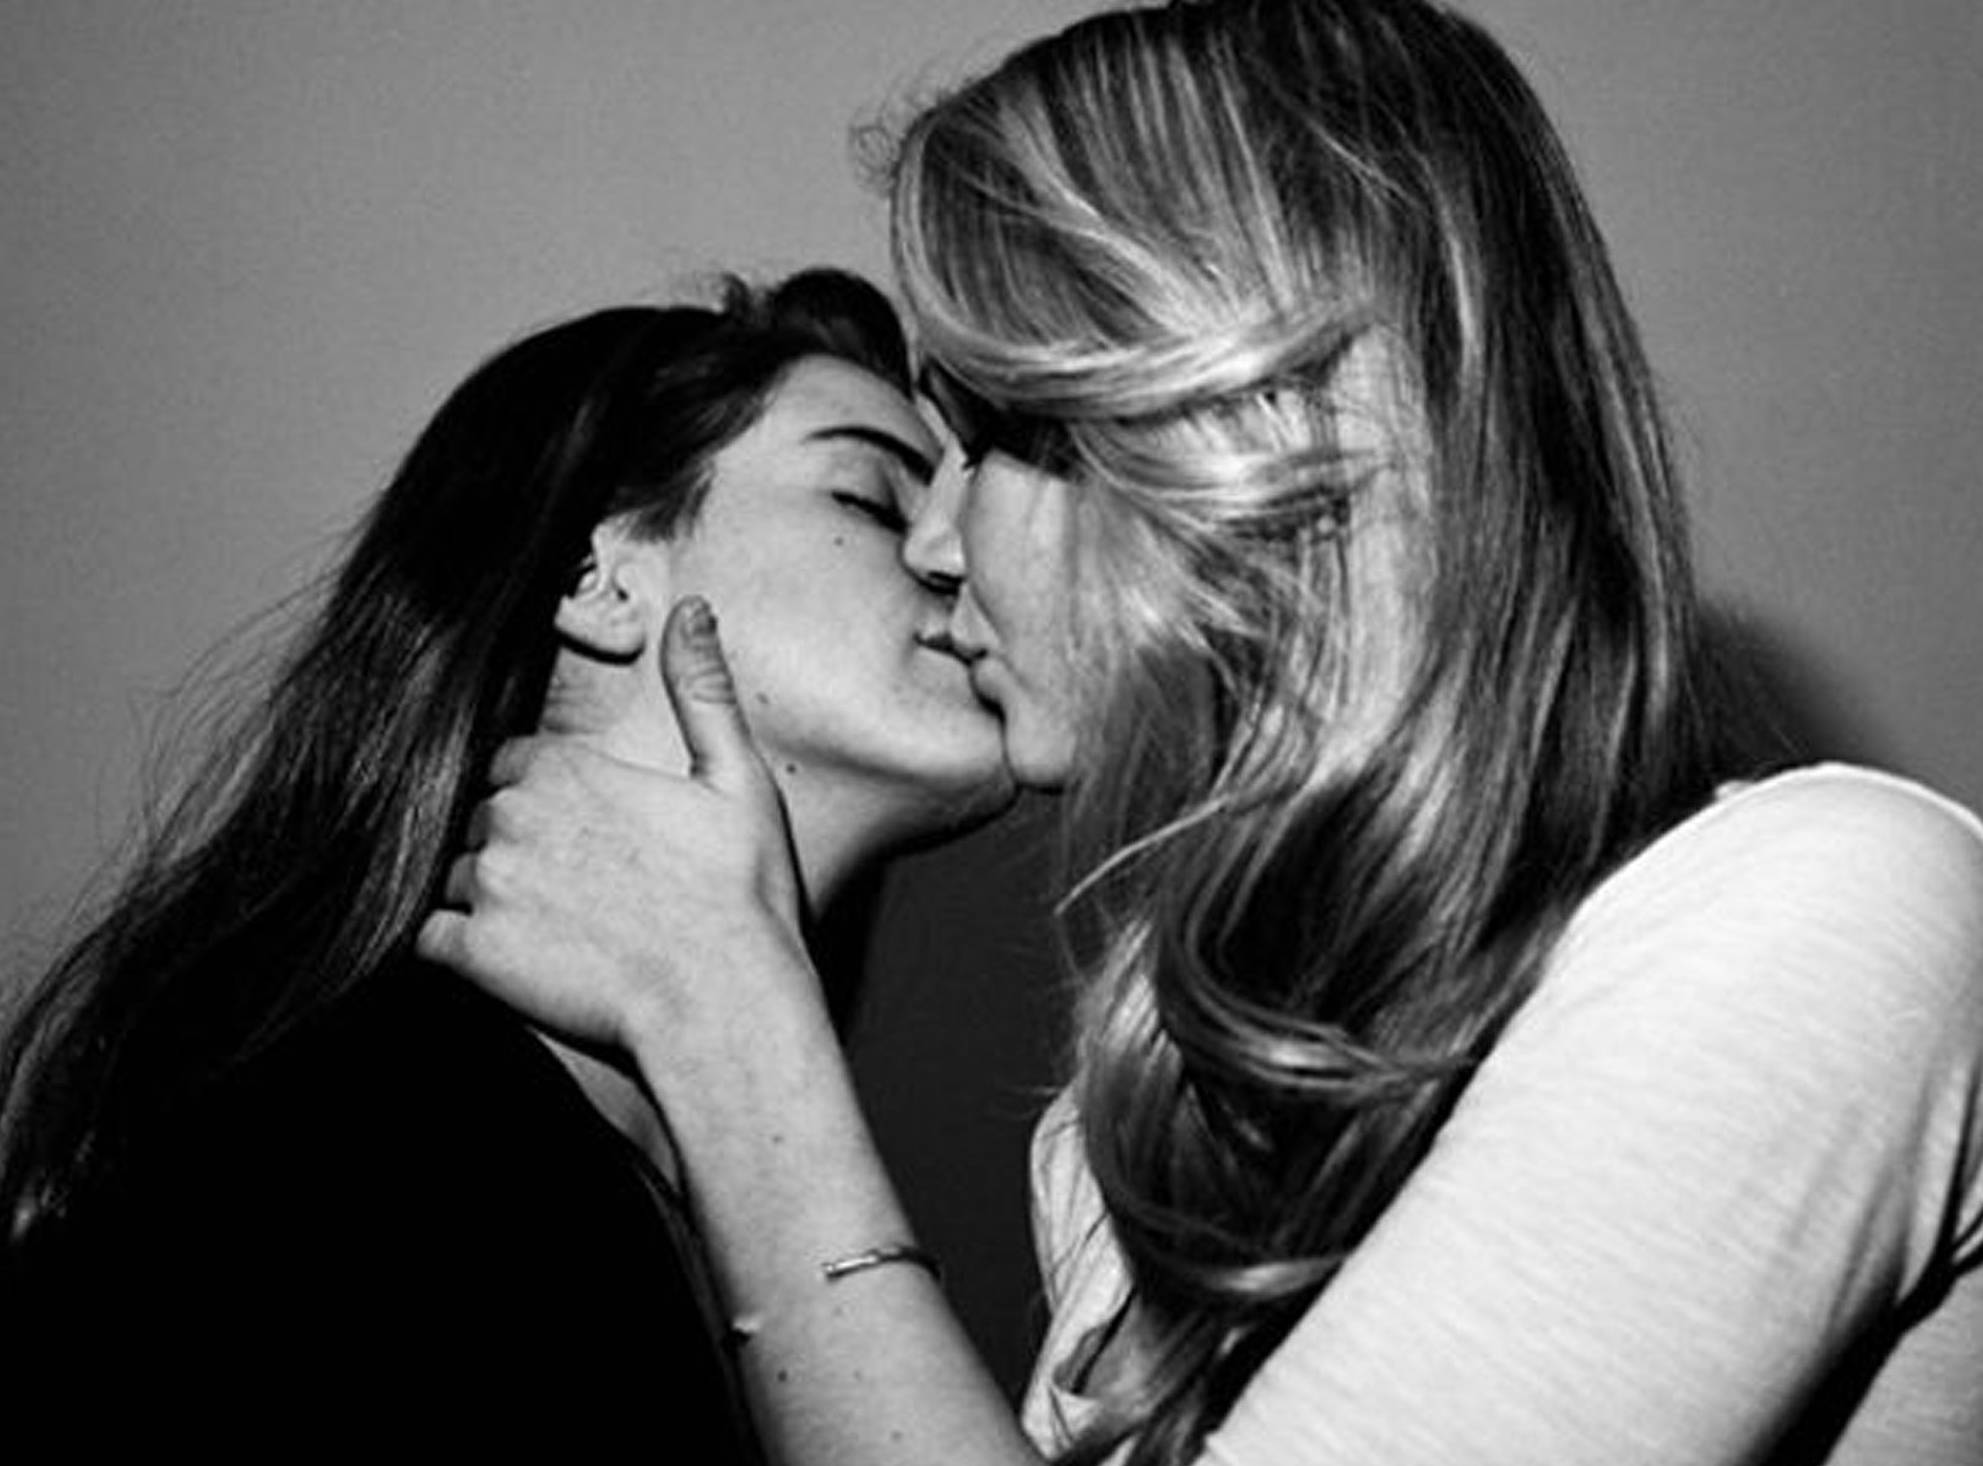 angela d russell add jennifer lawrence lesbian kiss photo